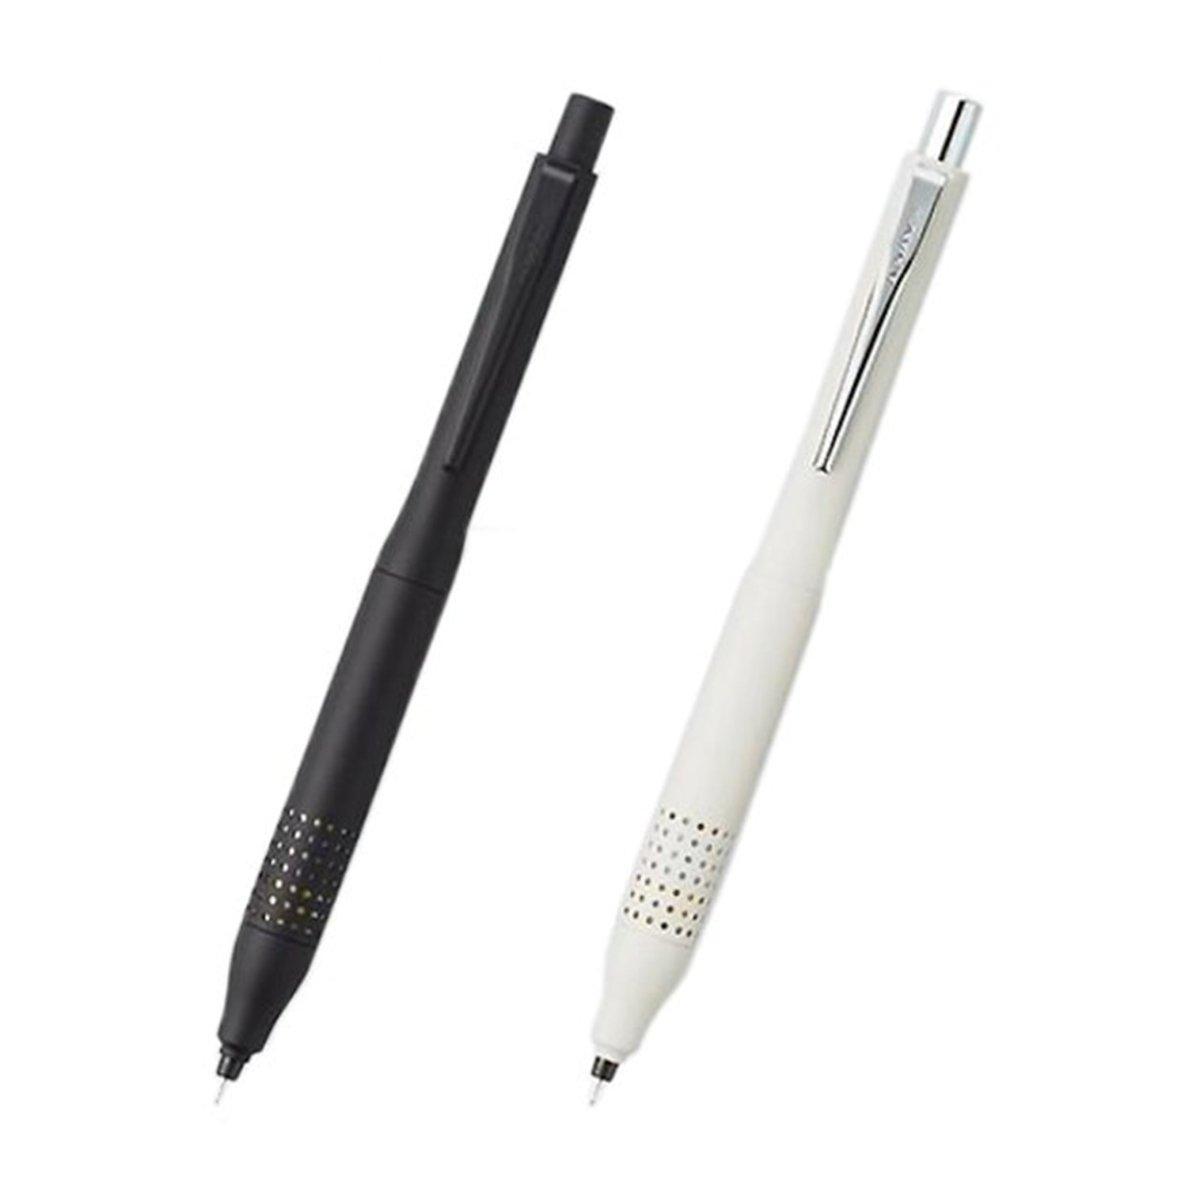 (Pre-Order) Uni KURU TOGA ADVANCE 0.3mm 0.5mm Fashion Mechanical Pencil Black Color M5-1030 M3-1030 - CHL-STORE 